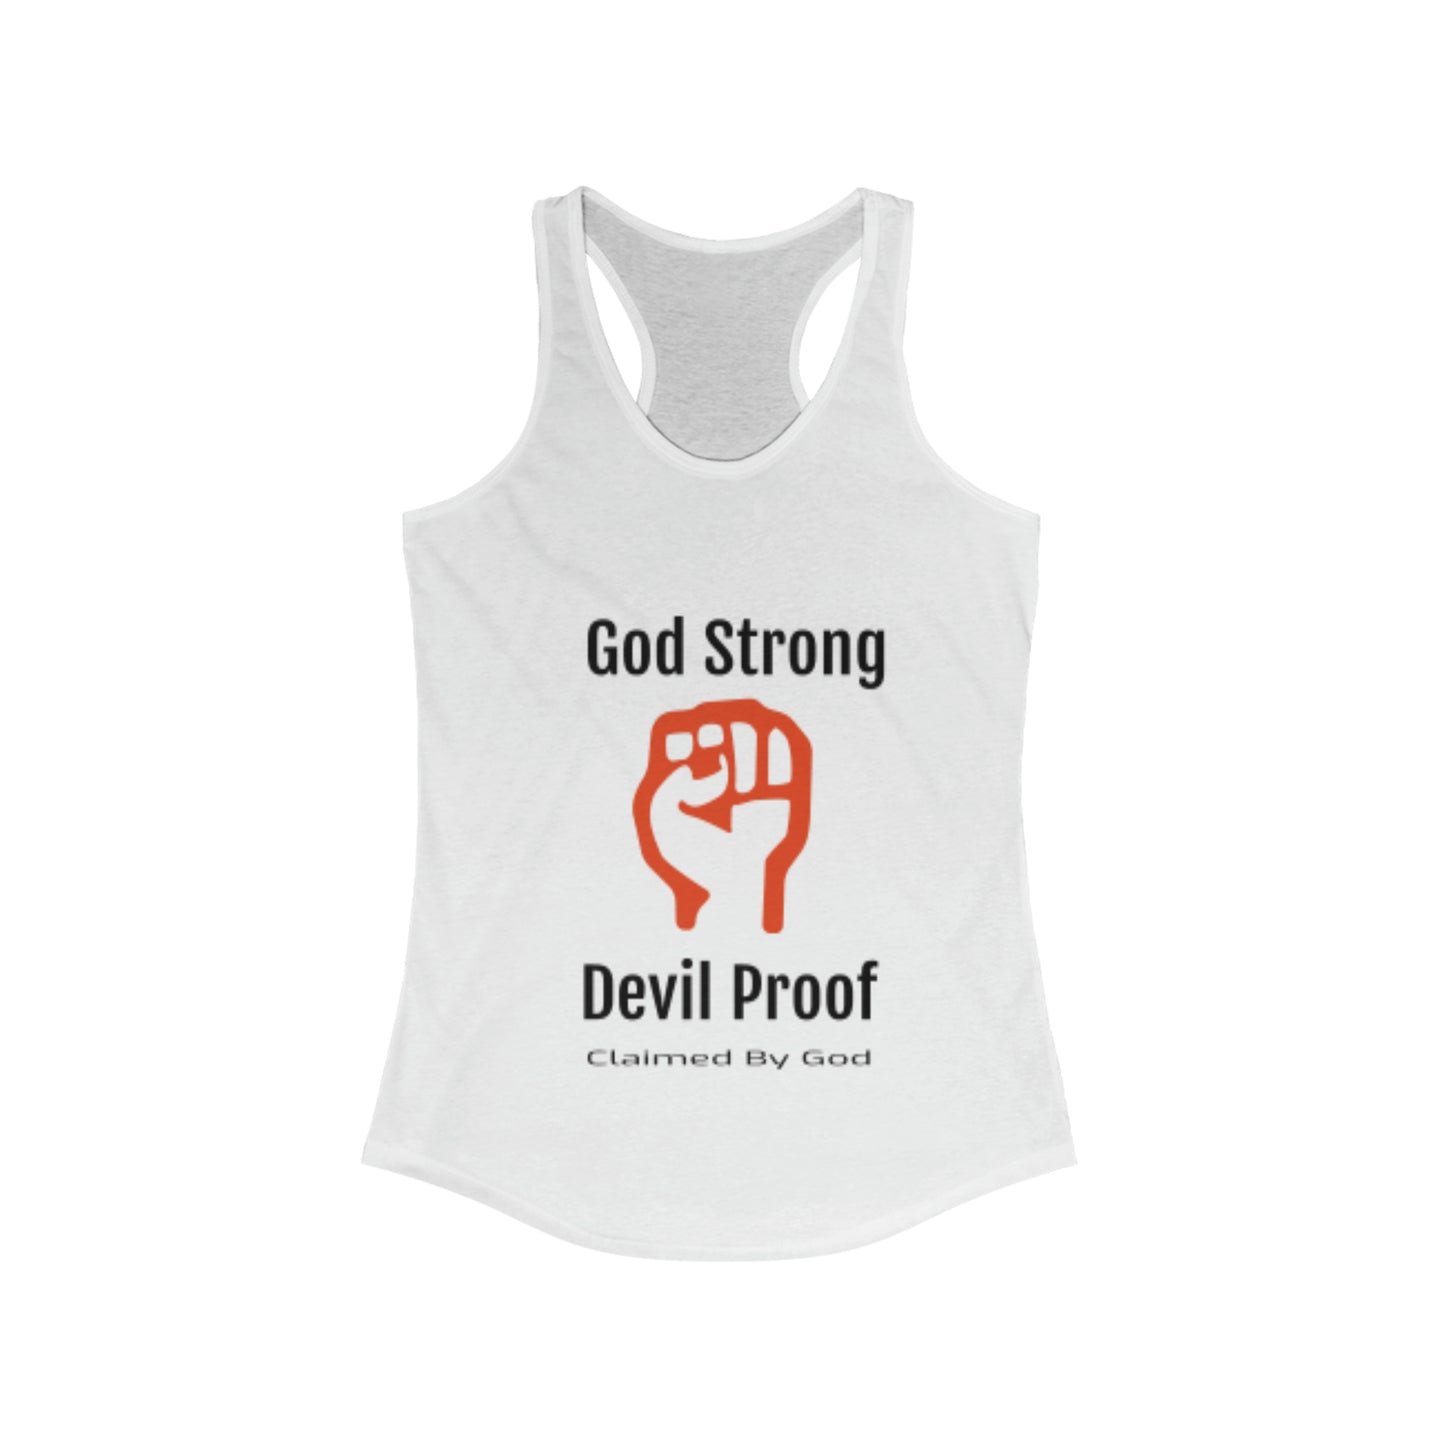 God strong devil proof slim fit tank-top